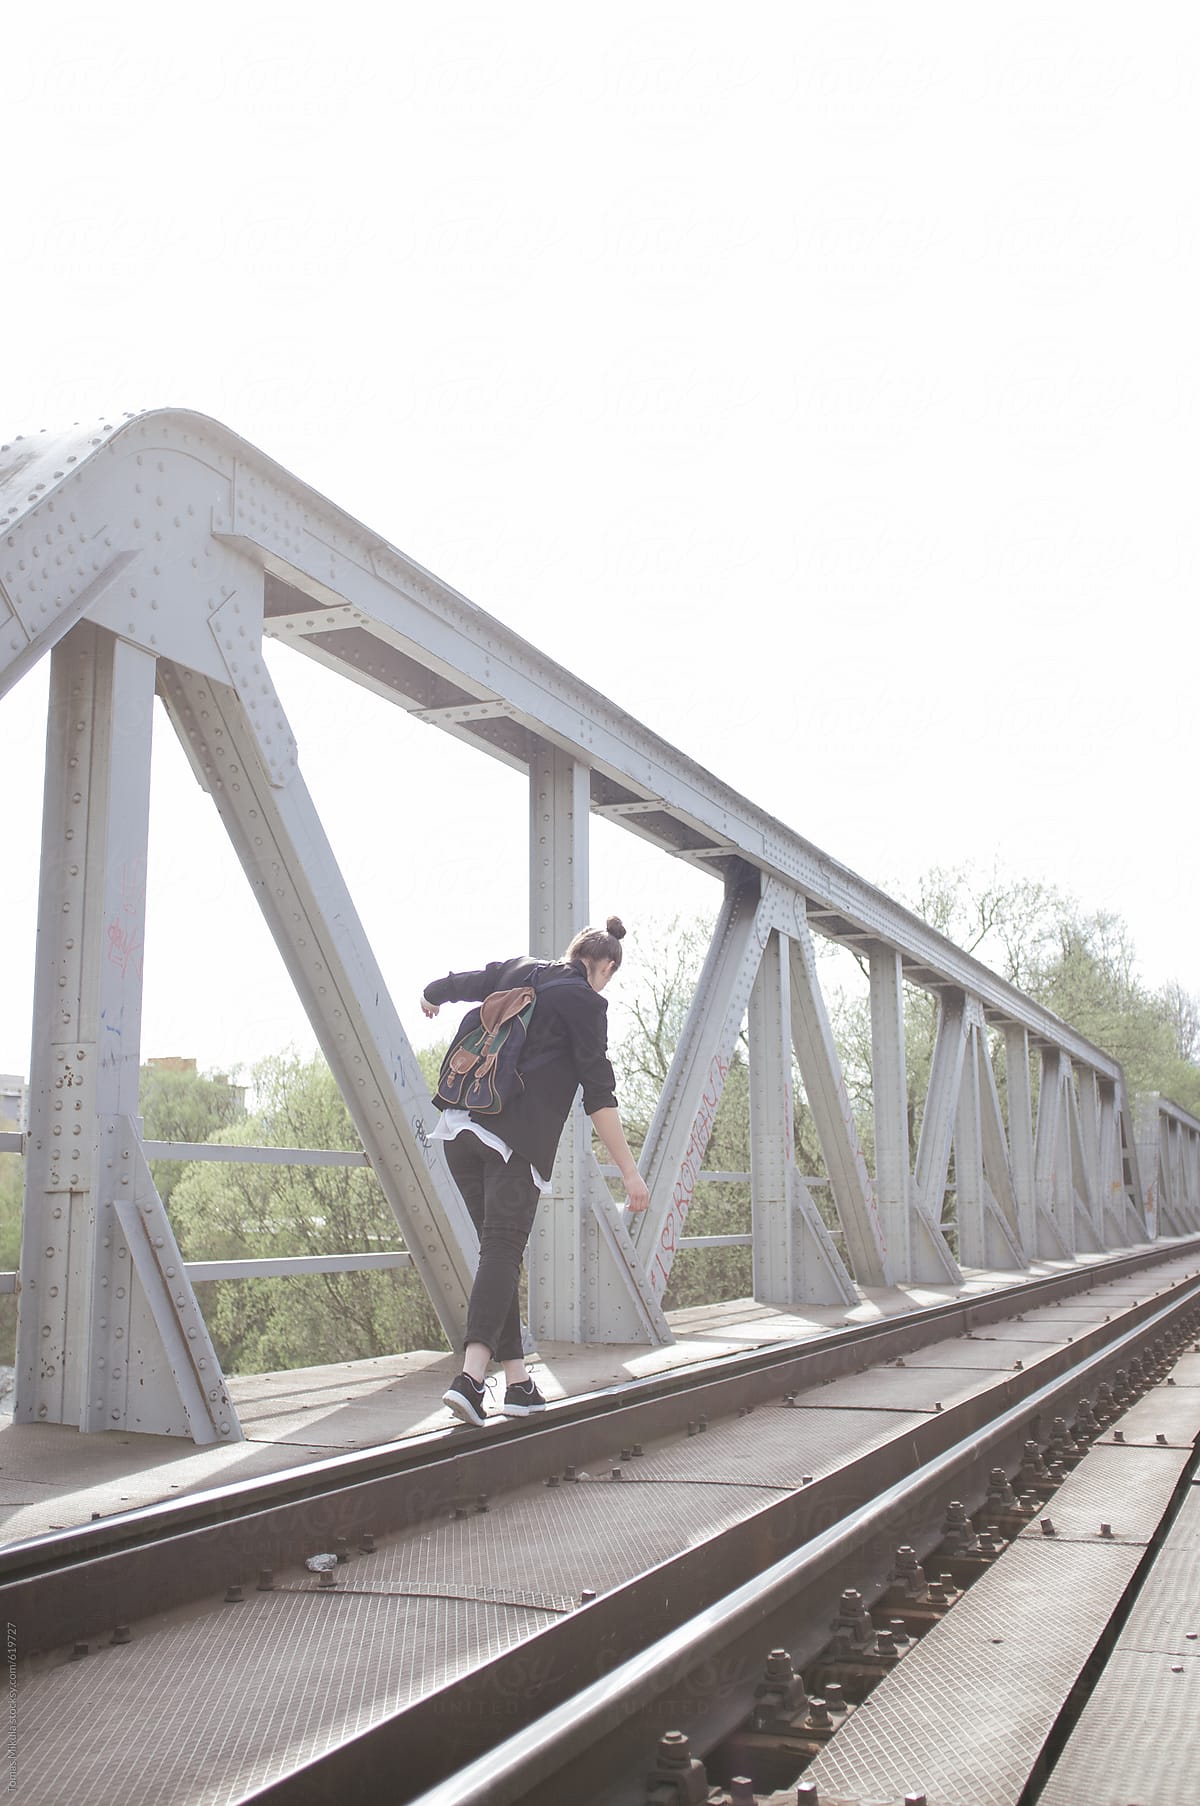 Girl with retro bag walking on the train bridge